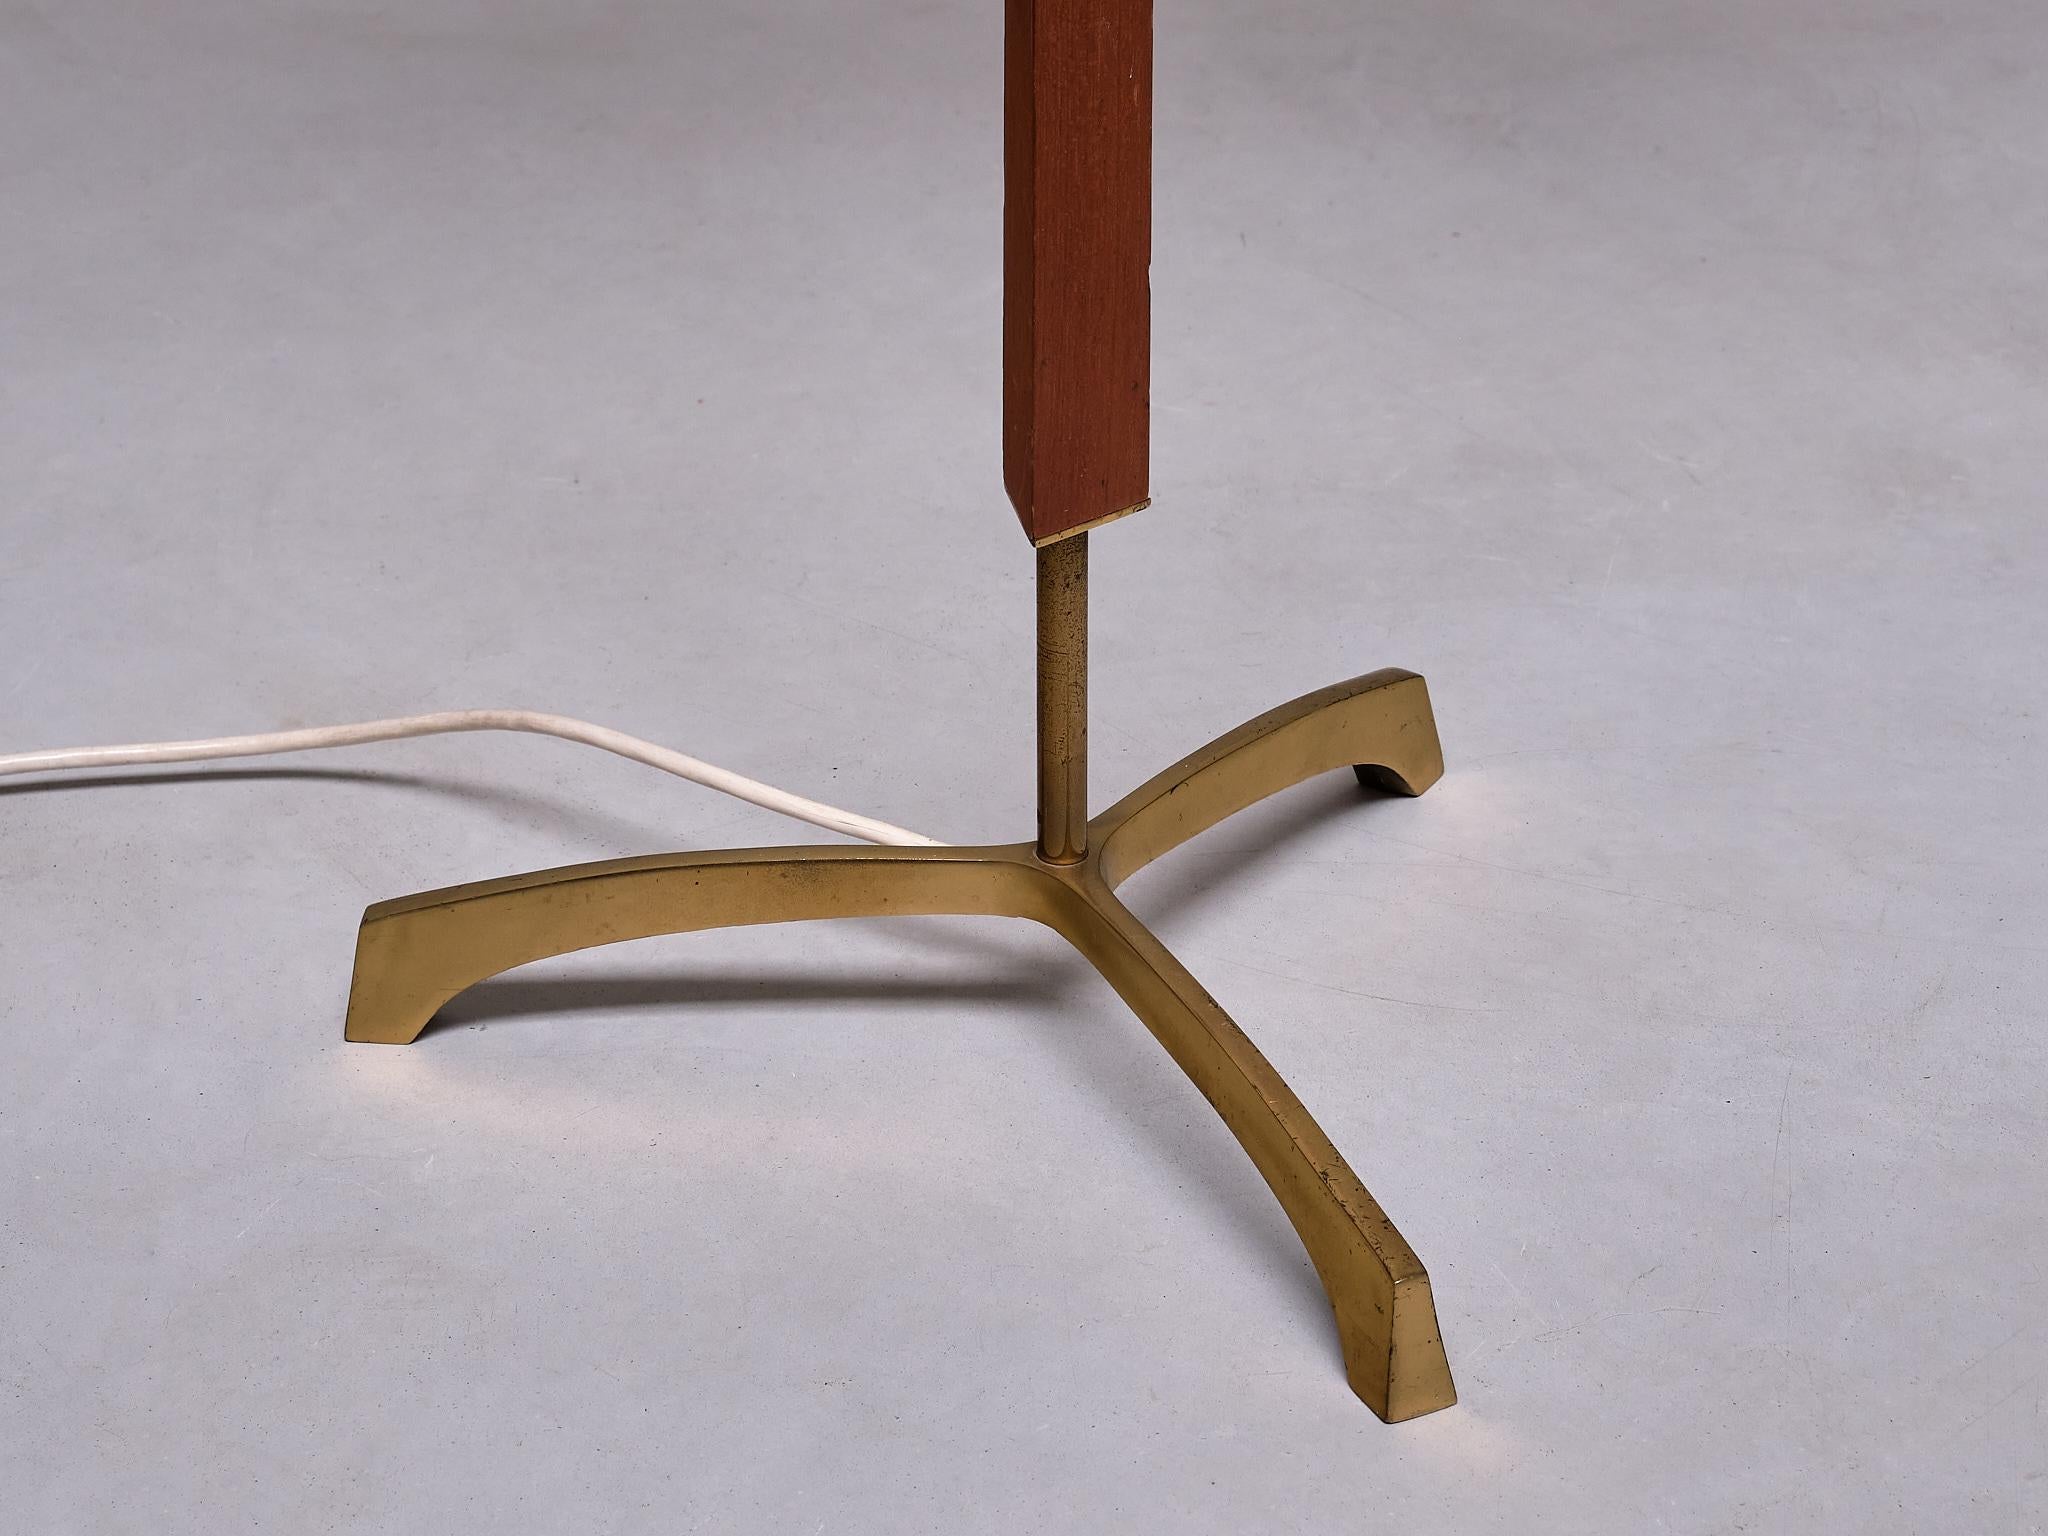 Danish Modern Three Legged Floor Lamp in Brass, Teak and Textured Shade, 1950s For Sale 6